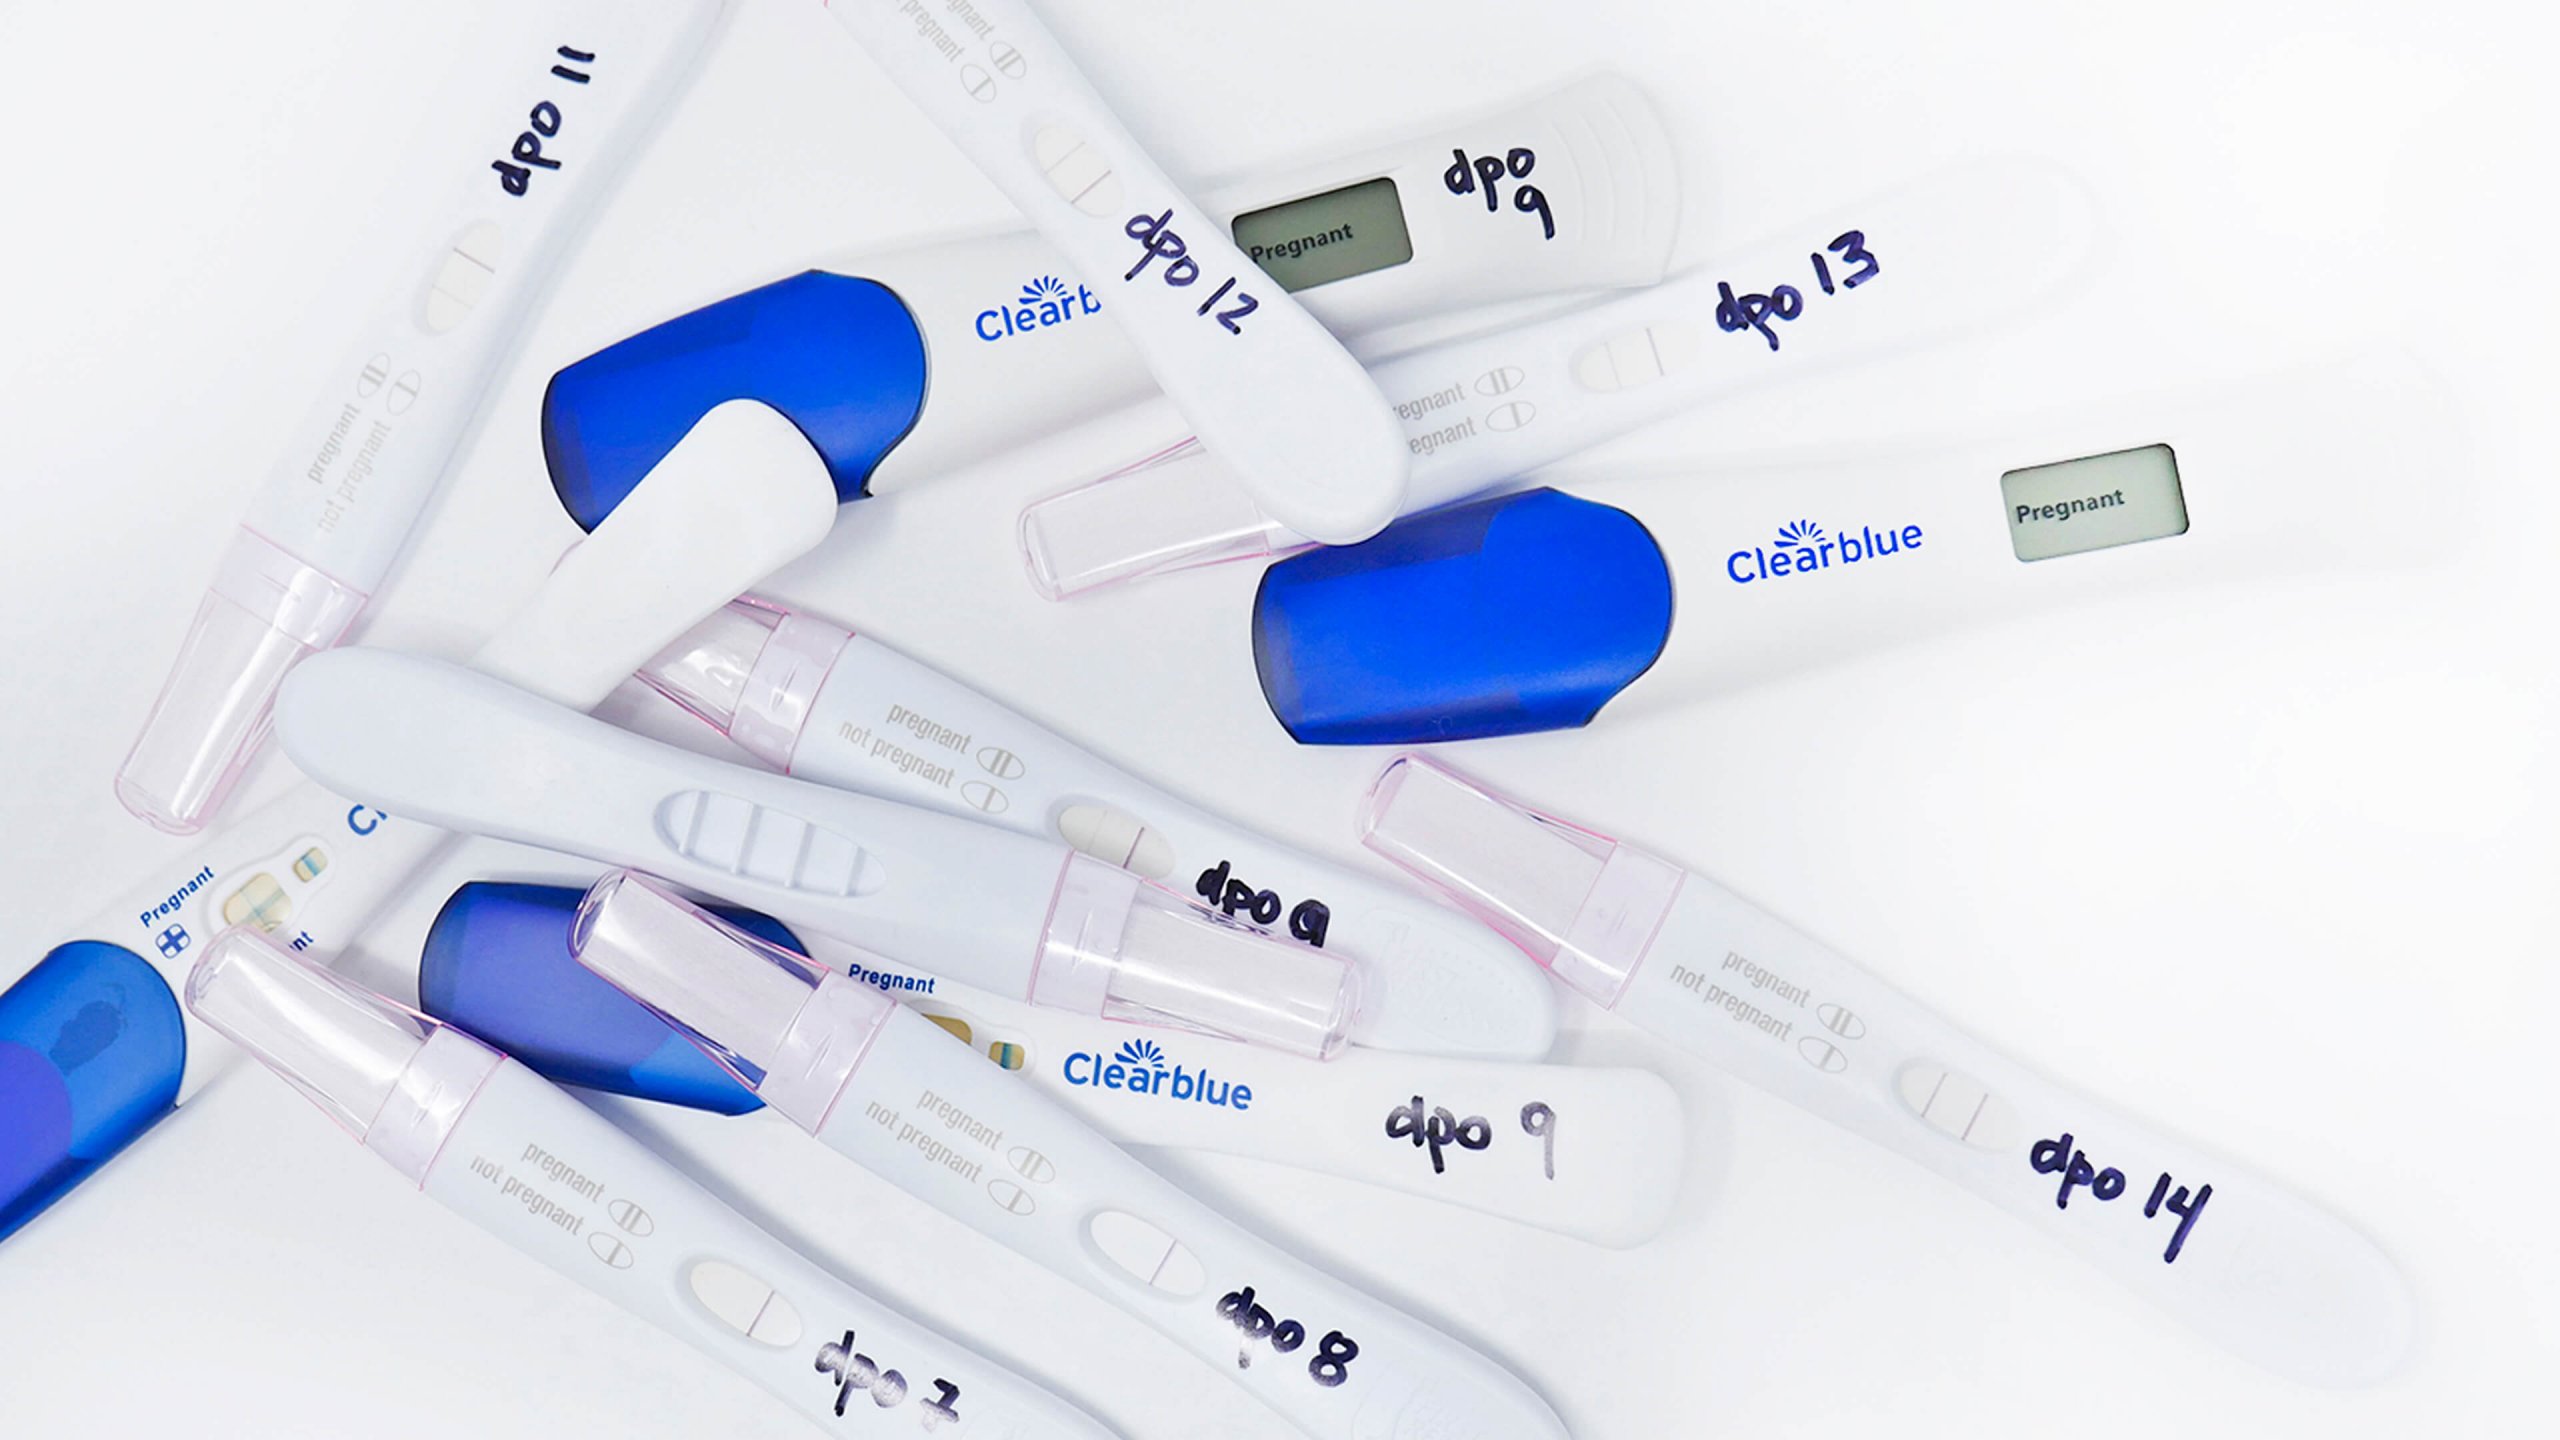 Pregnancy Tests Strips 10 MIU/mL High Sensitive HCG Urine Test Early  Pregnancy Predictor Kit 25 Count